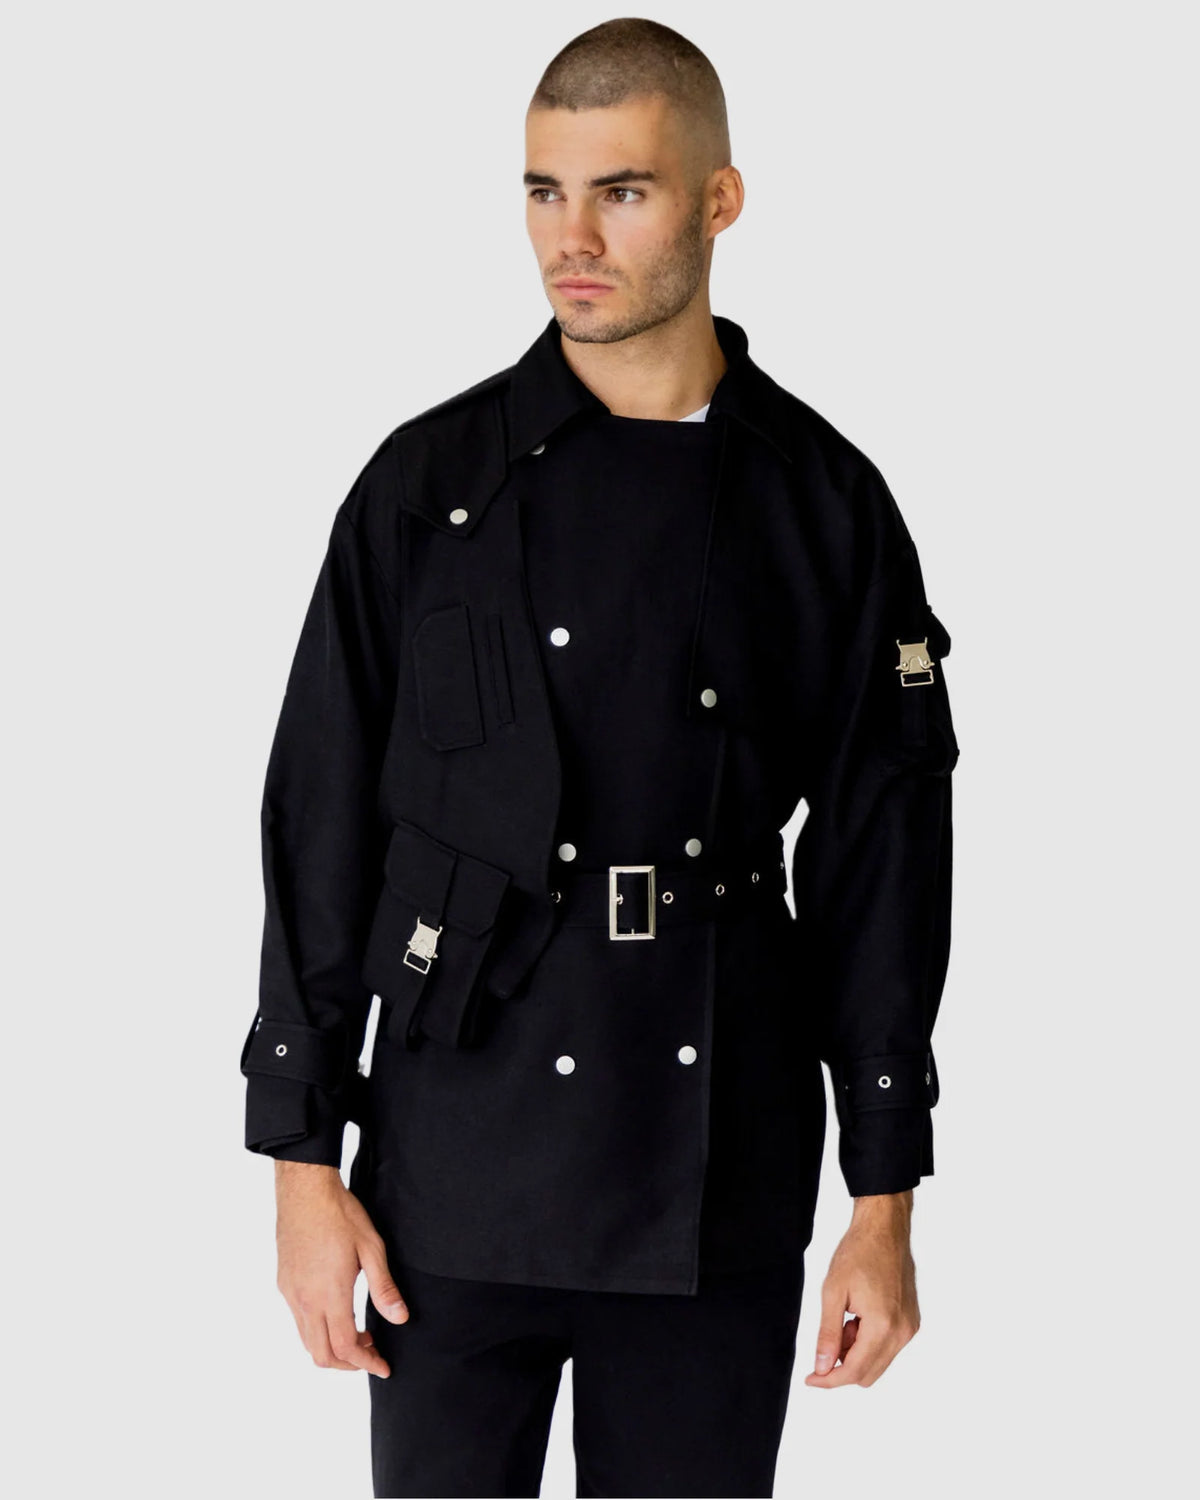 Justin Cassin Atticus Military Jacket in Black Color